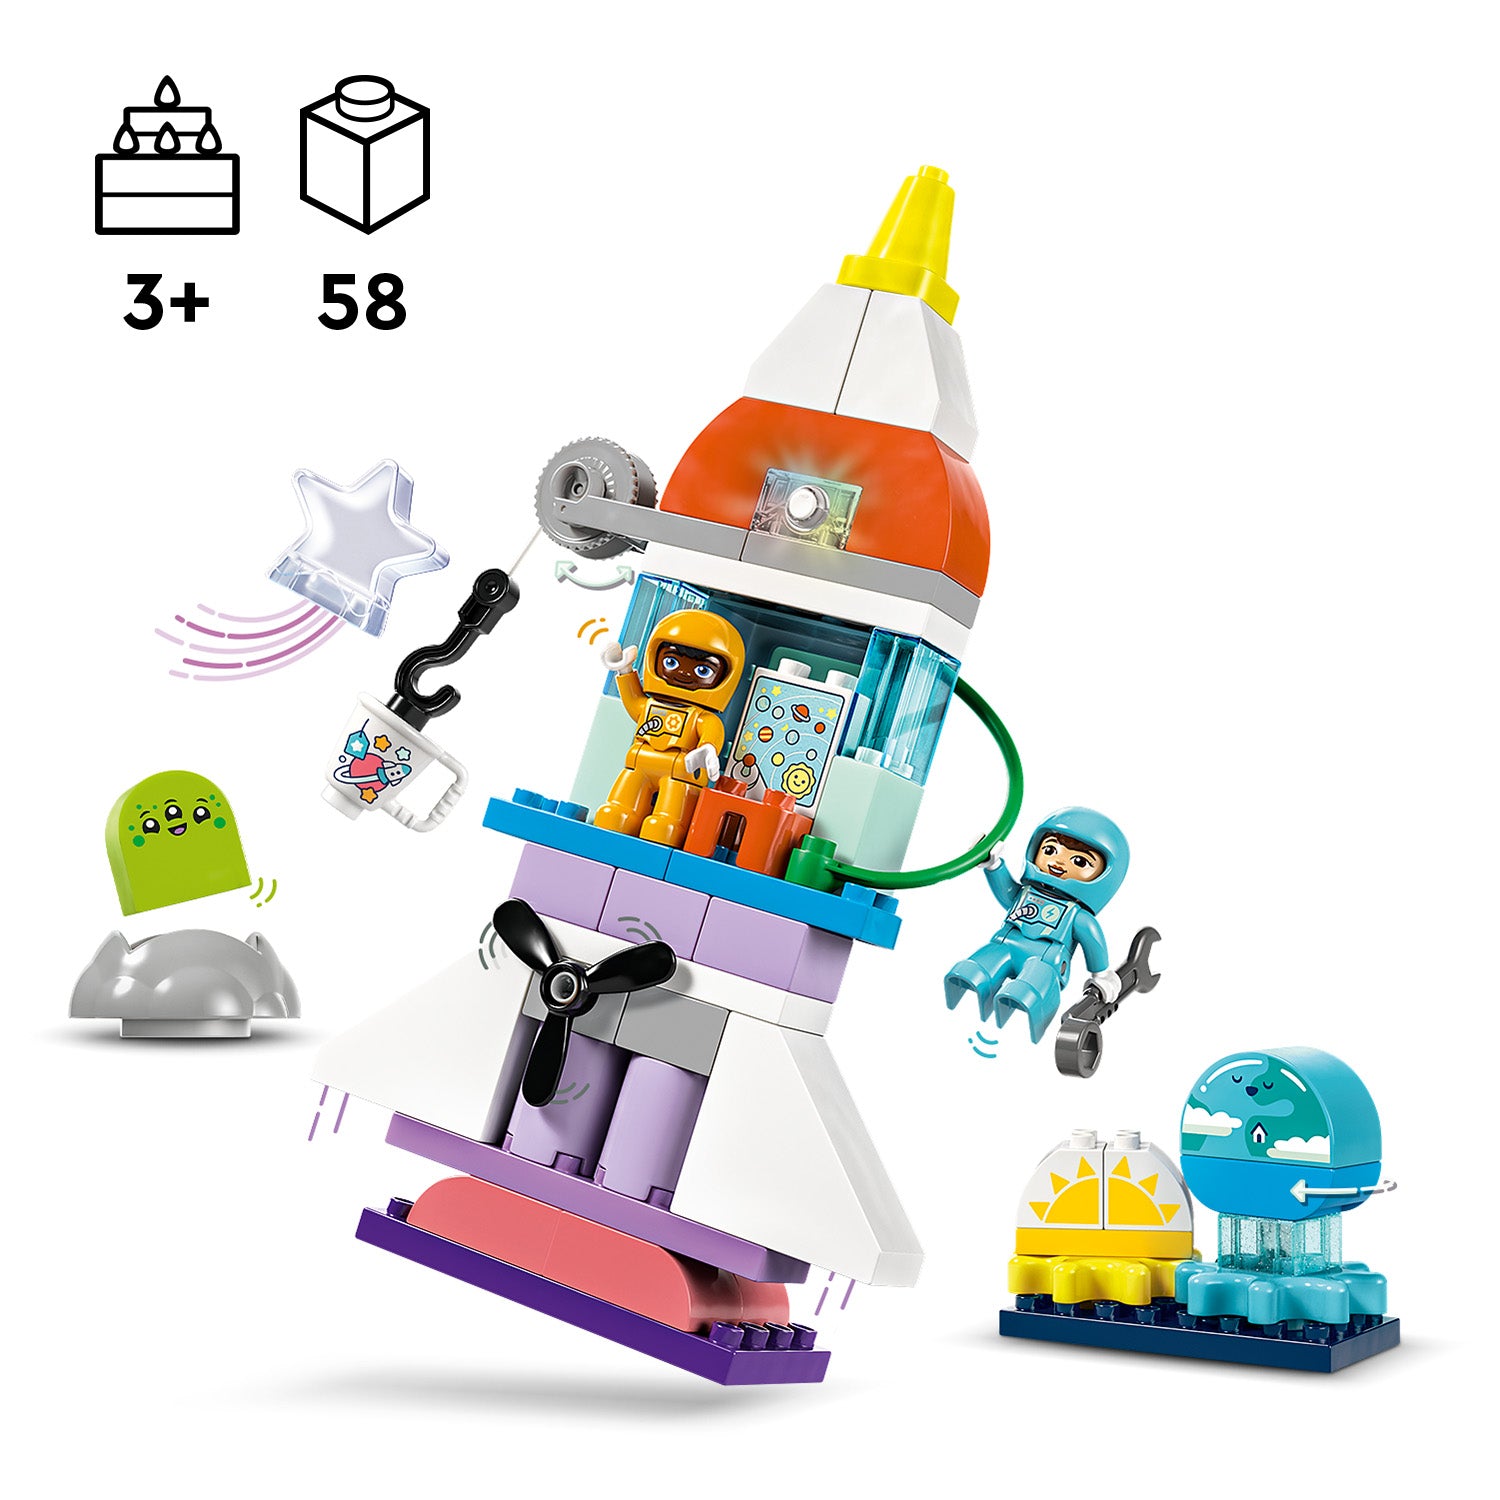 Lego 10422 3in1 Space Shuttle Adventure